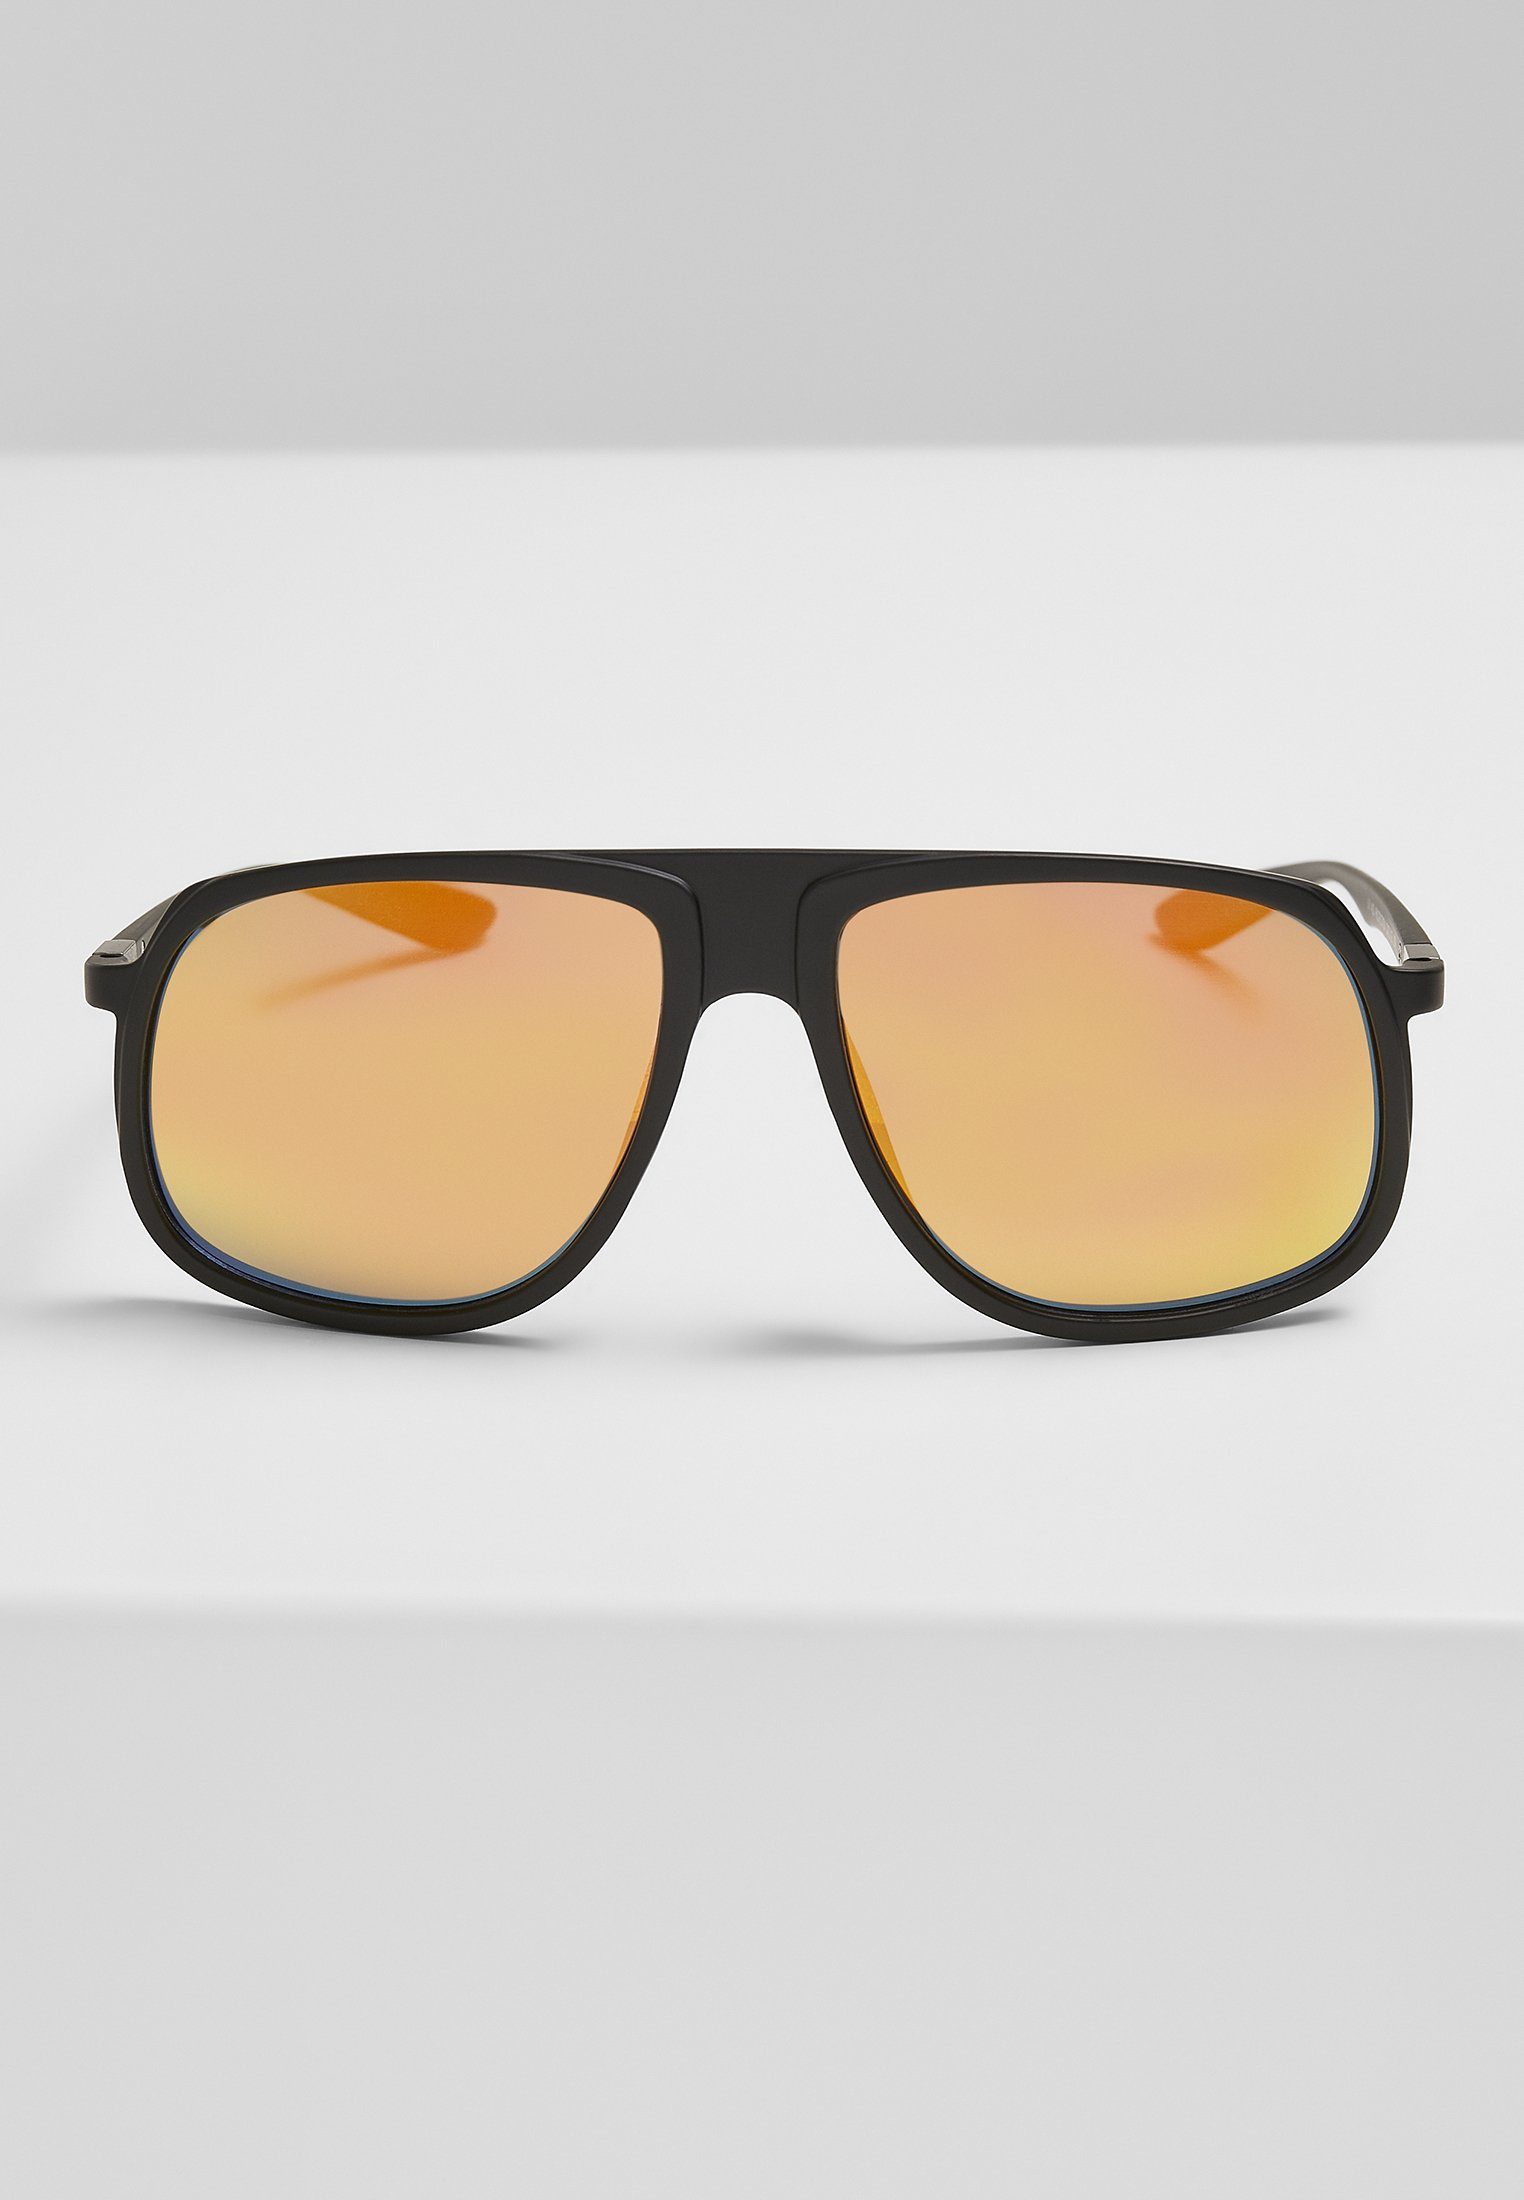 Sunglasses Sonnenbrille Chain CLASSICS 107 Accessoires Retro URBAN